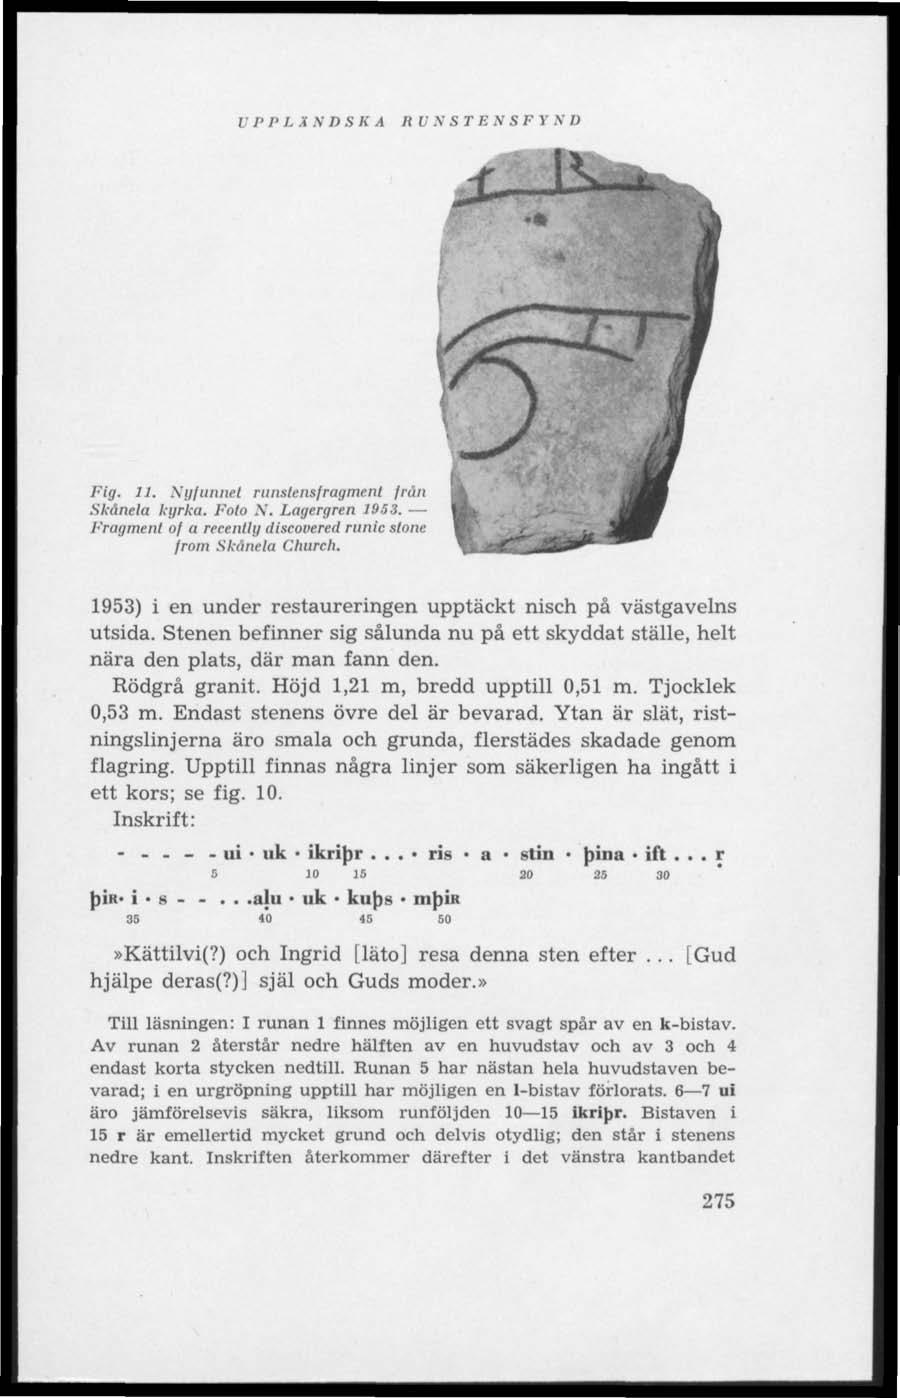 VPPLÄNDSK A R VN ST EN SFYND Fig. 11, Ngfunnel runstensfragment från Skånela kyrka. Foto \. Lagergren 1953. Fragment of a recently discovered runic slone from Skånela Church.